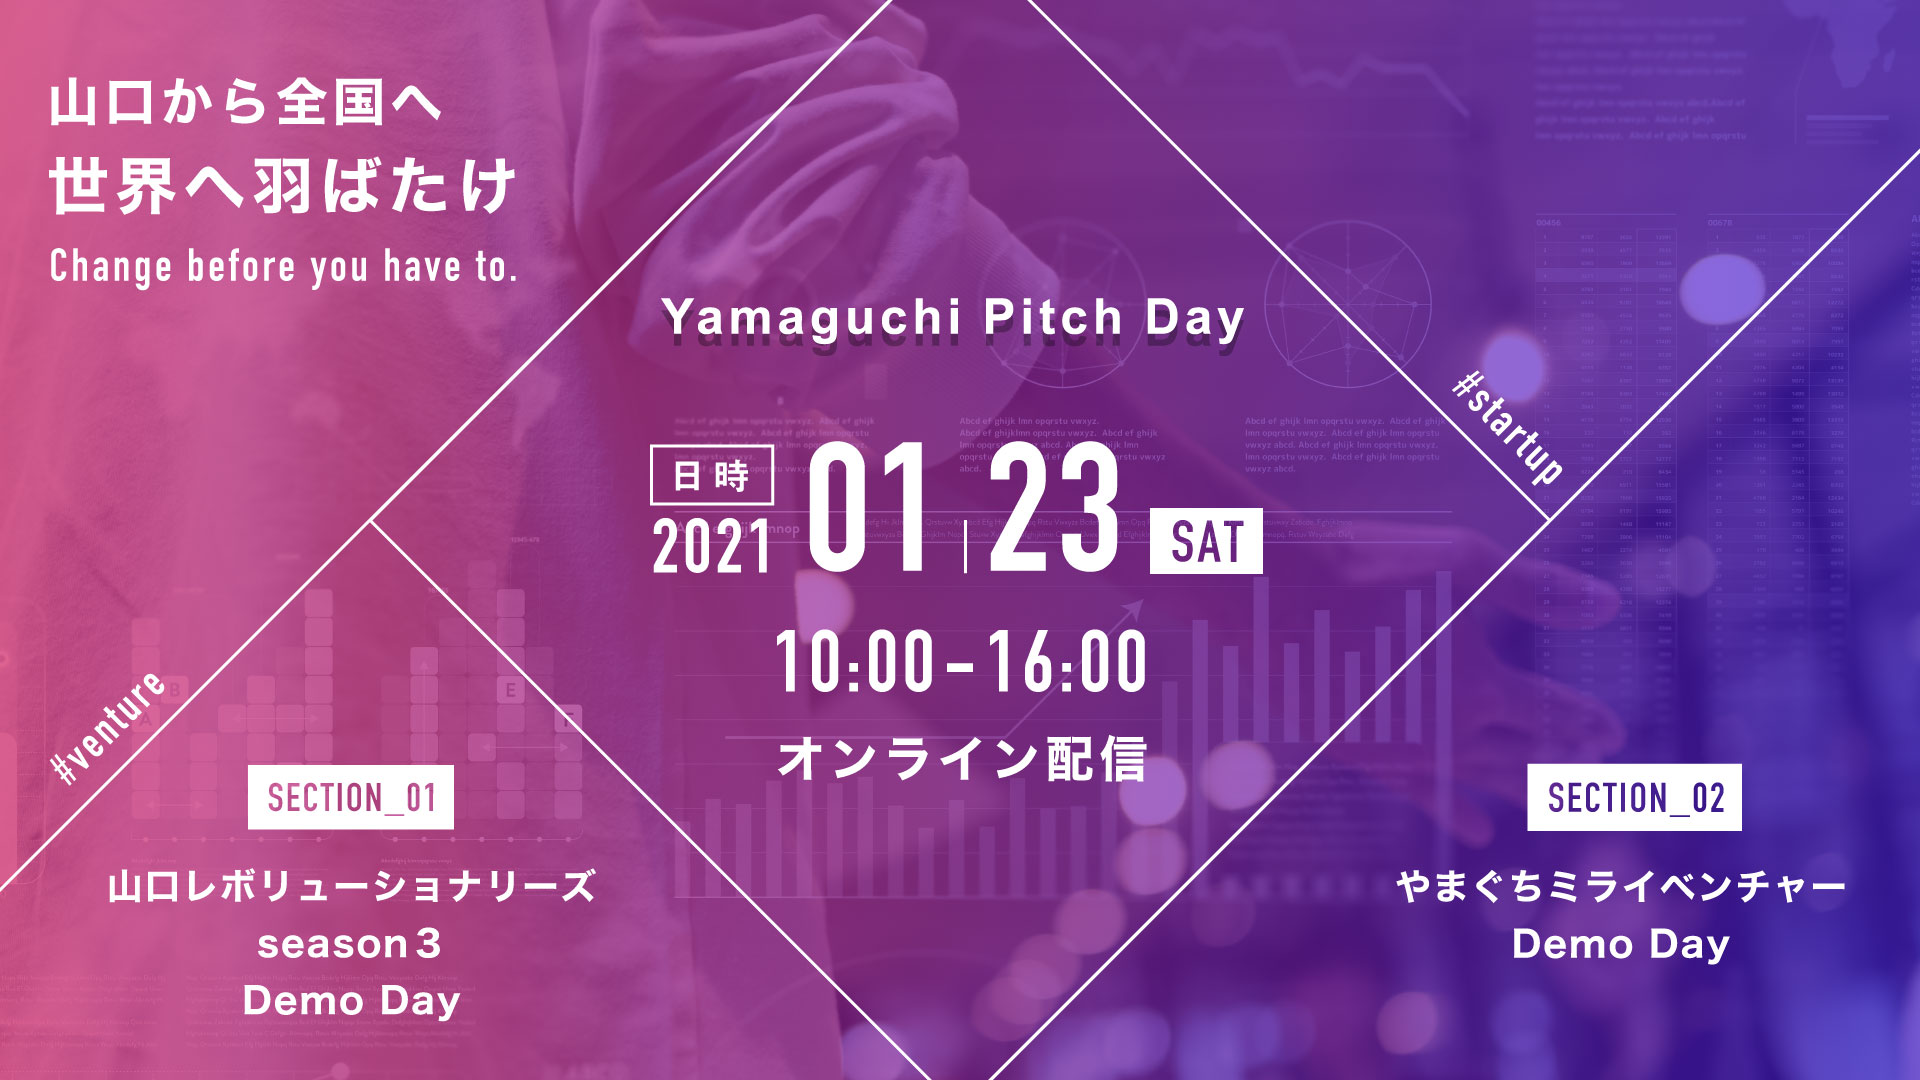 「Yamaguchi Pitch Day」の開催について